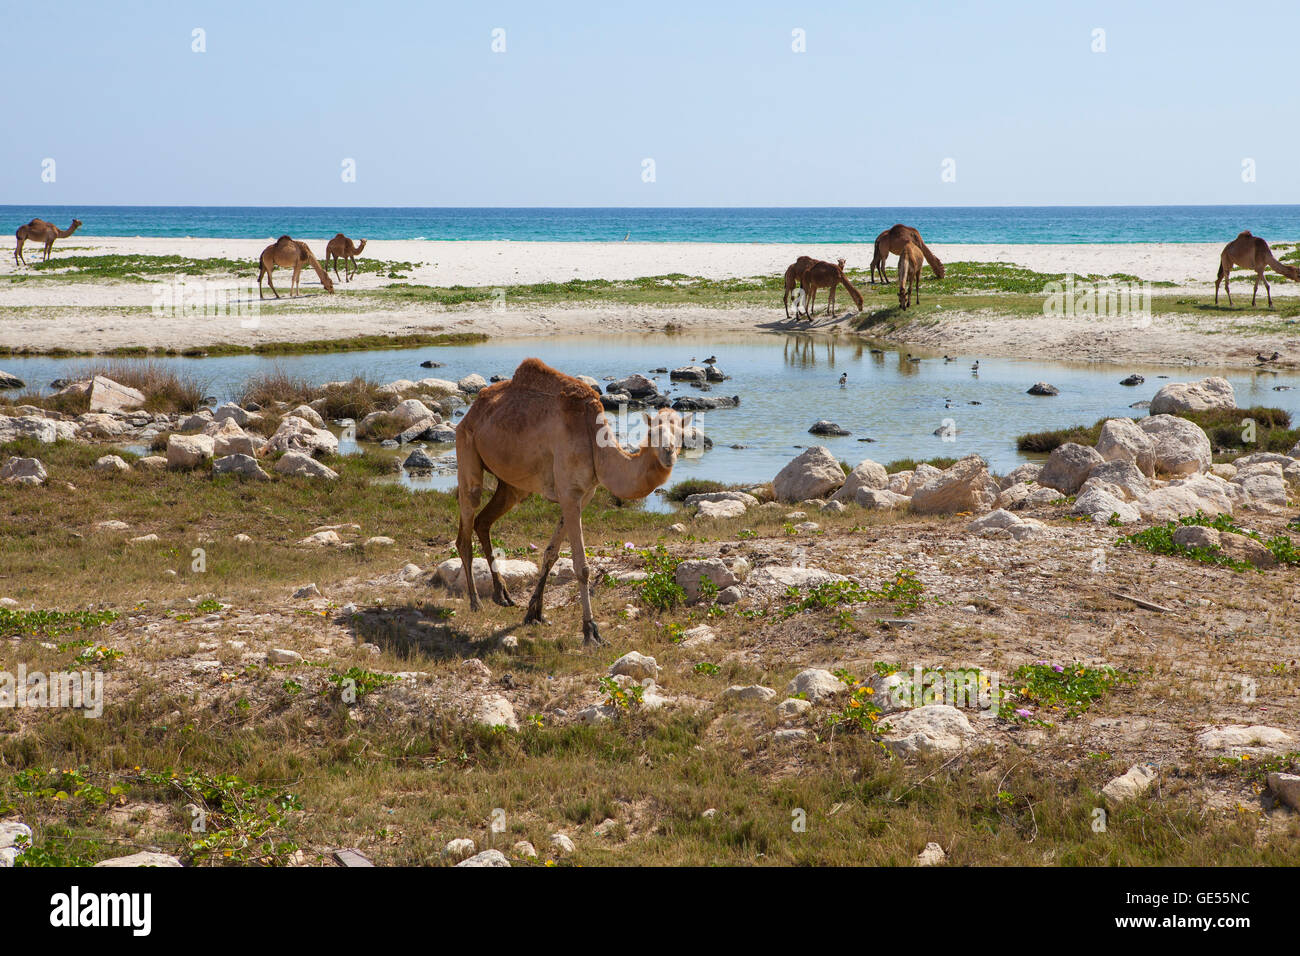 Immagine di cammelli su una spiaggia,in Dhofar, Oman. Foto Stock